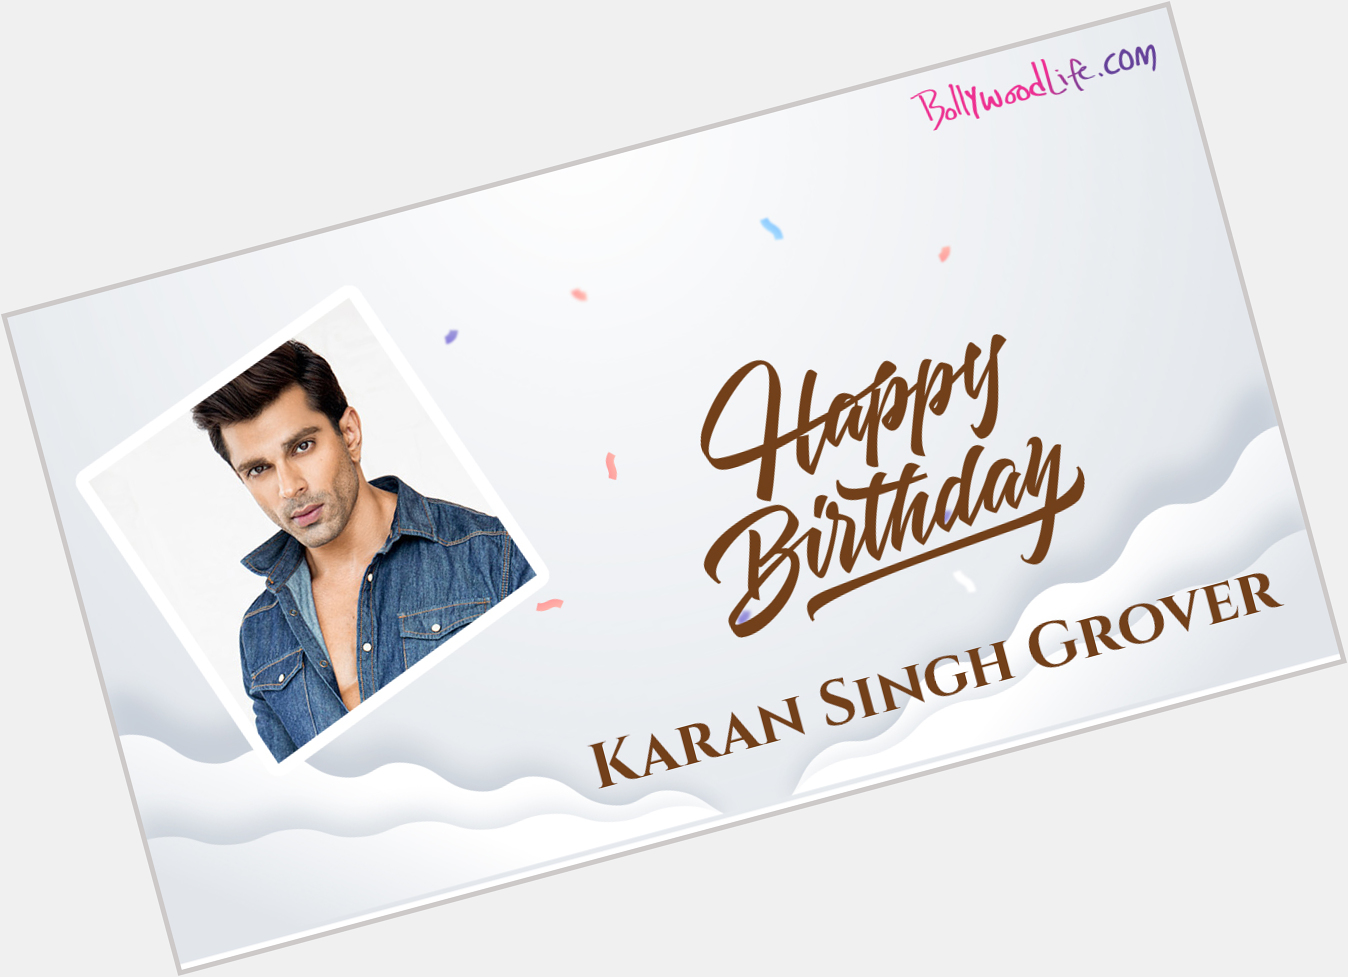 Happy Birthday Karan Singh Grover!   